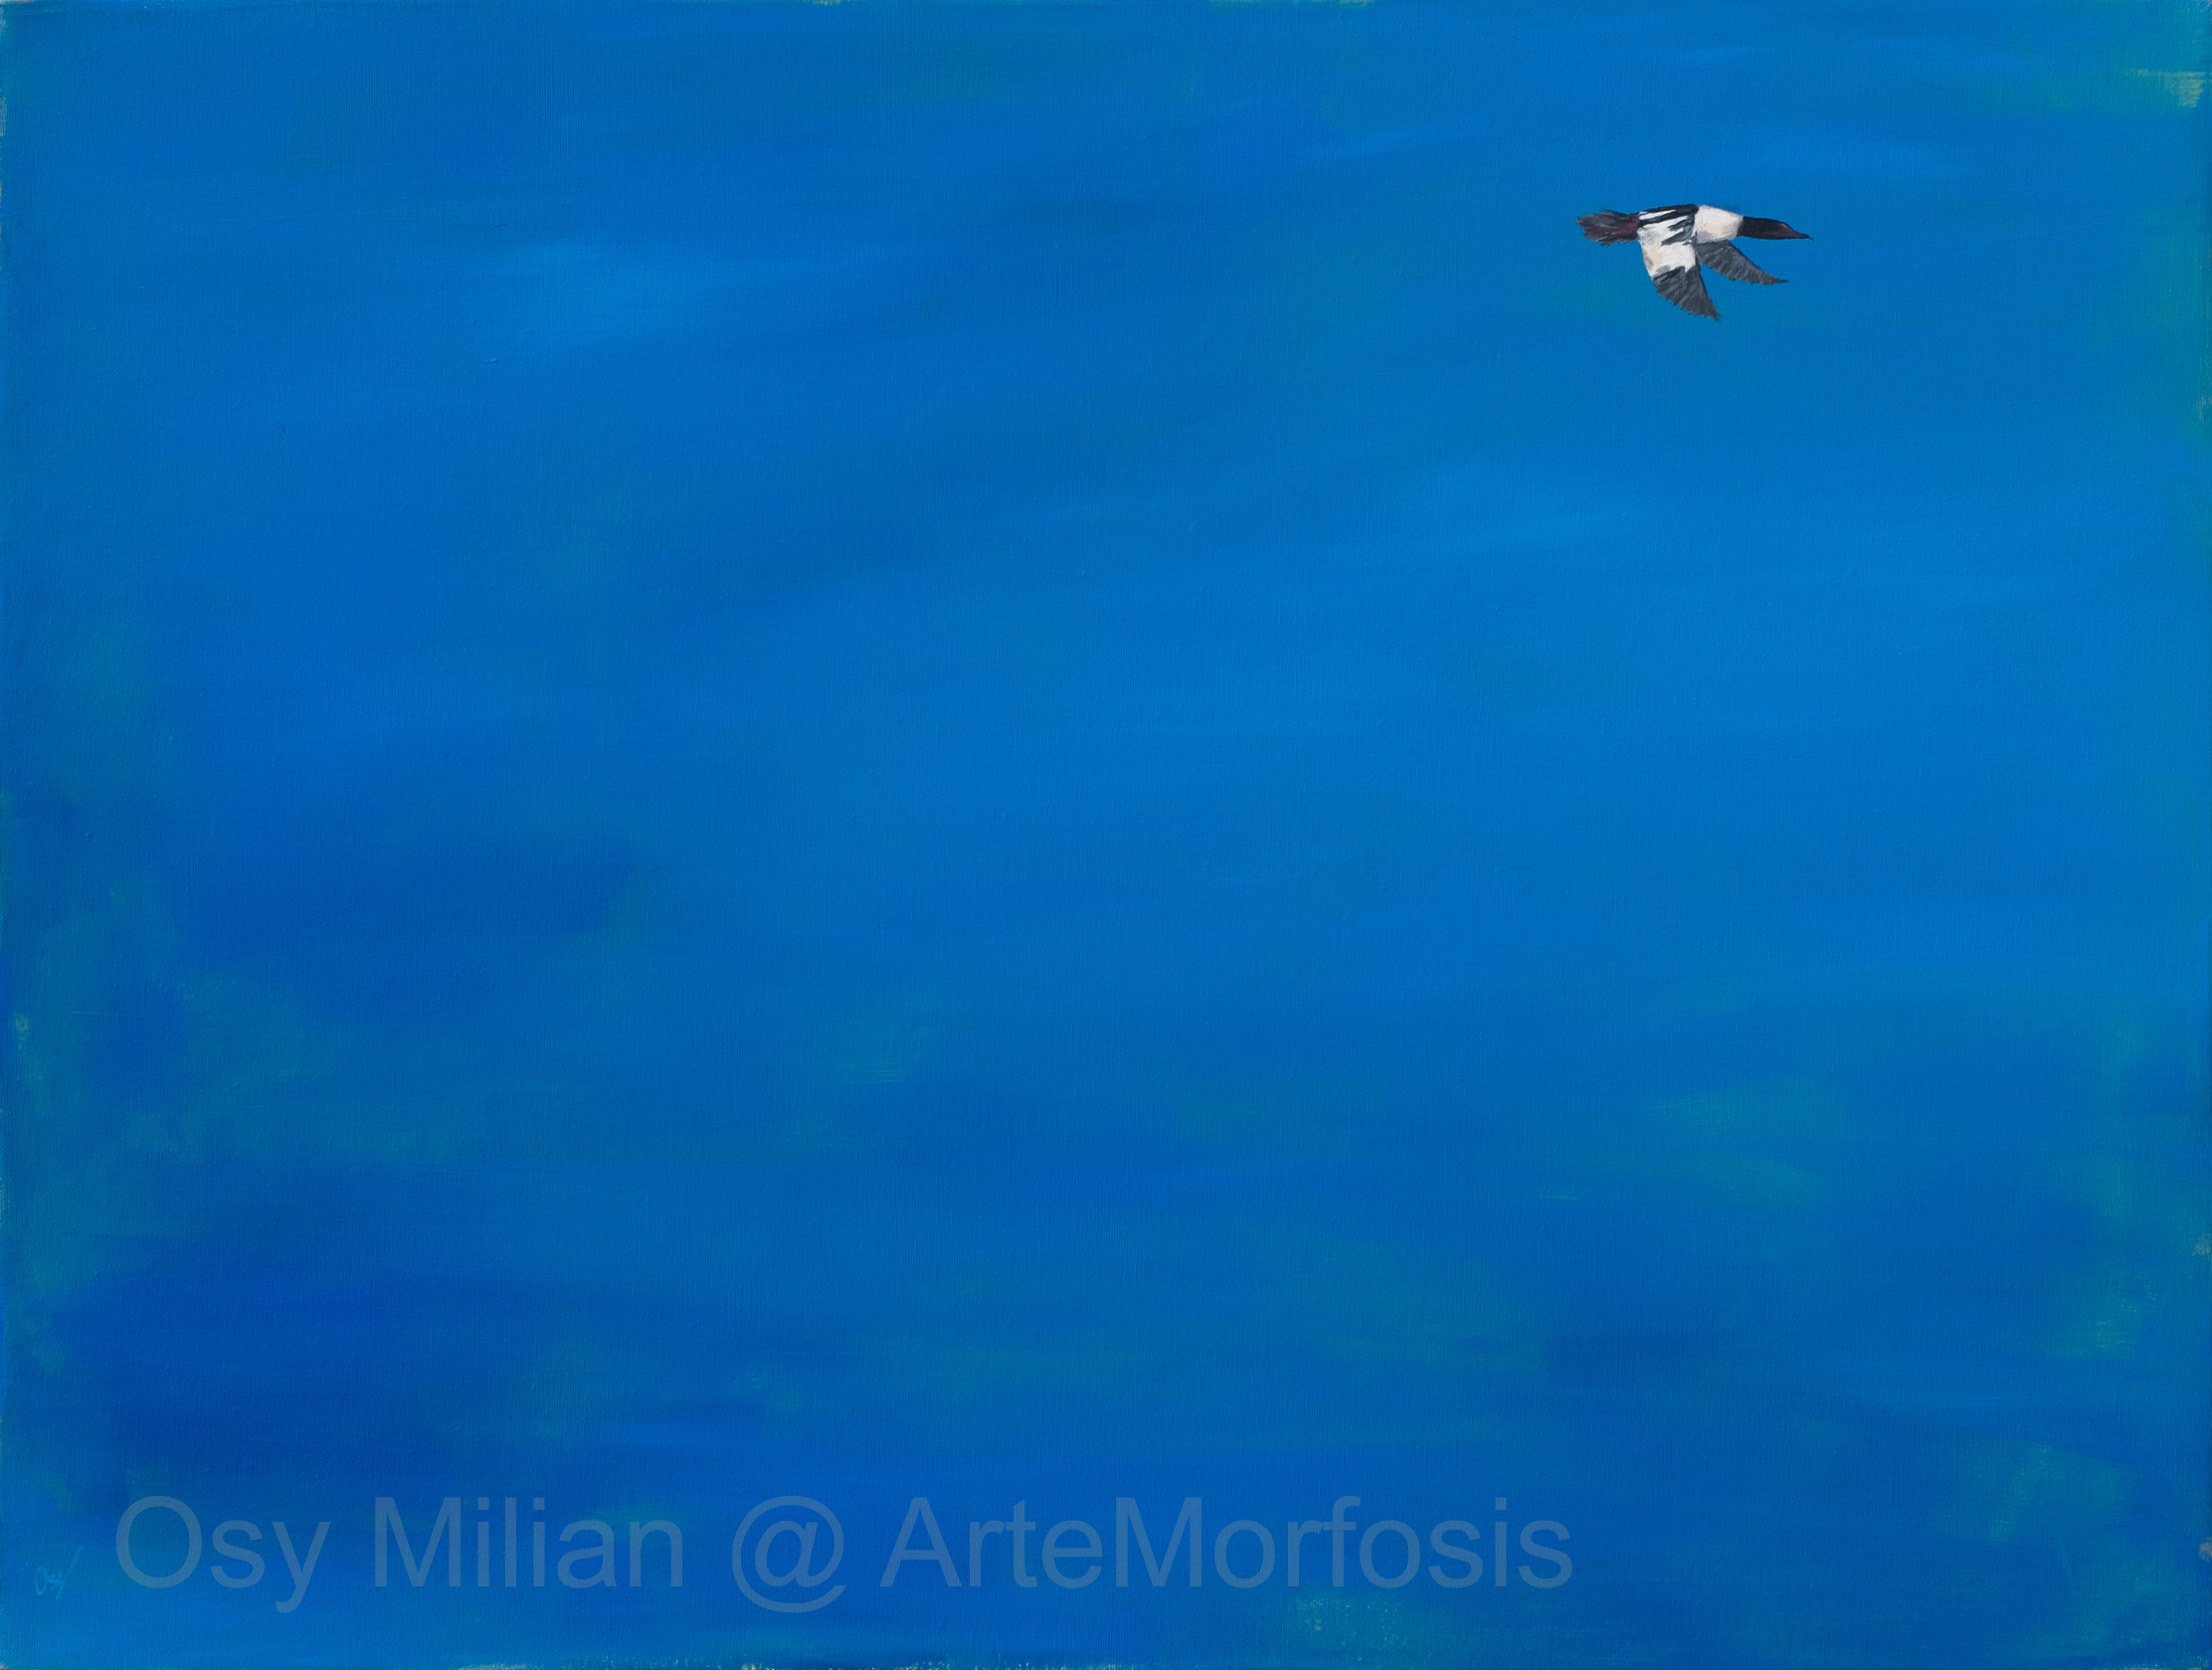 OSY MILIAN - Dimension no geografica, Acrilico/lienzo, 60 x 80 cm, 2016